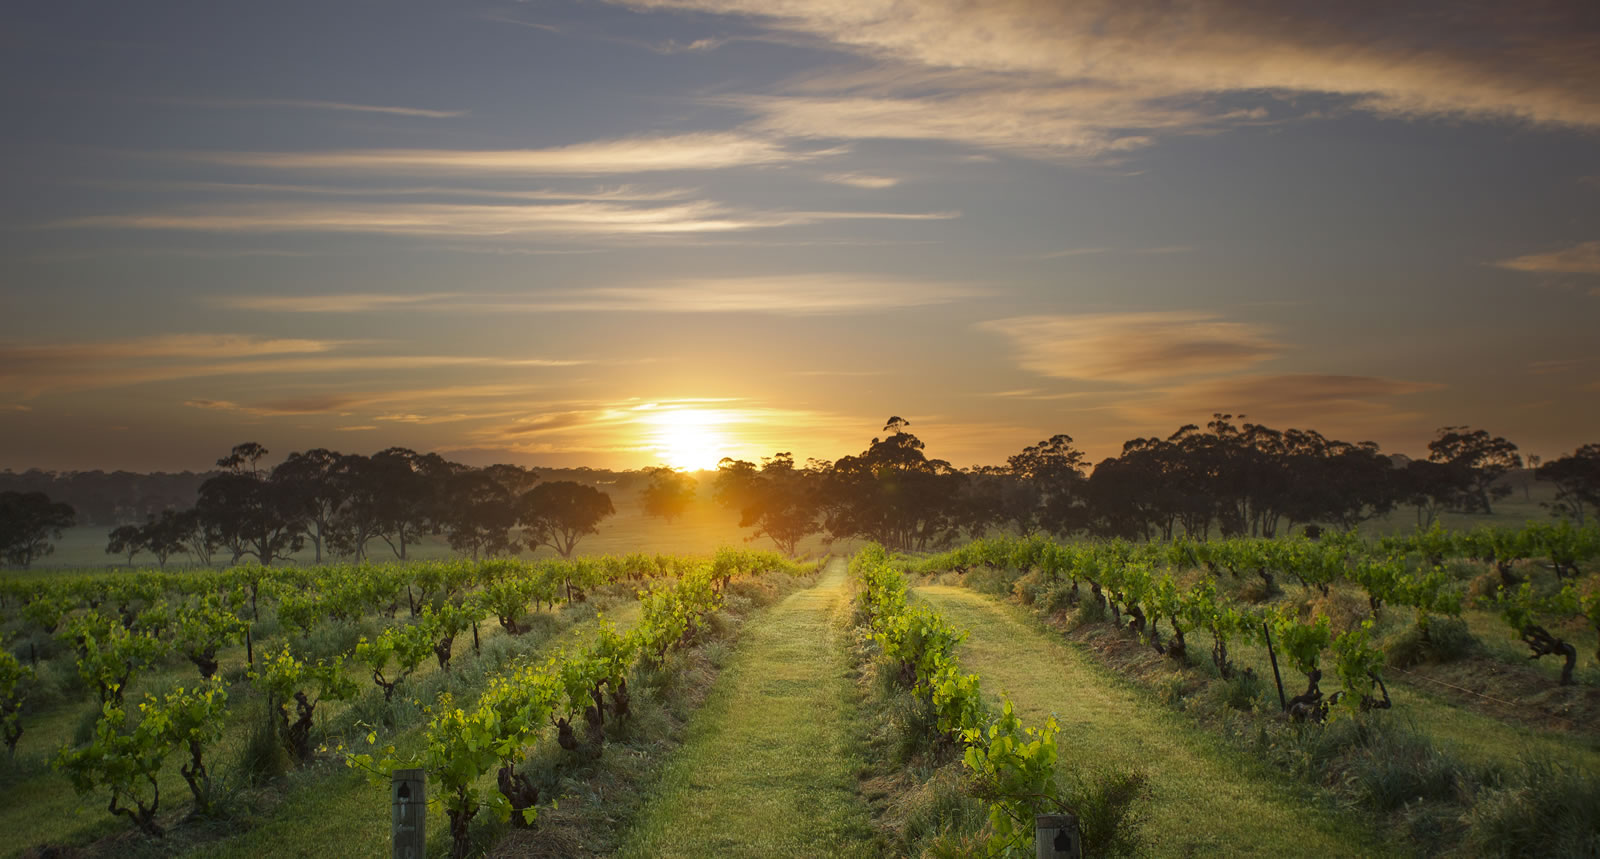 Rows of vines in the Mount Edelstone vineyards